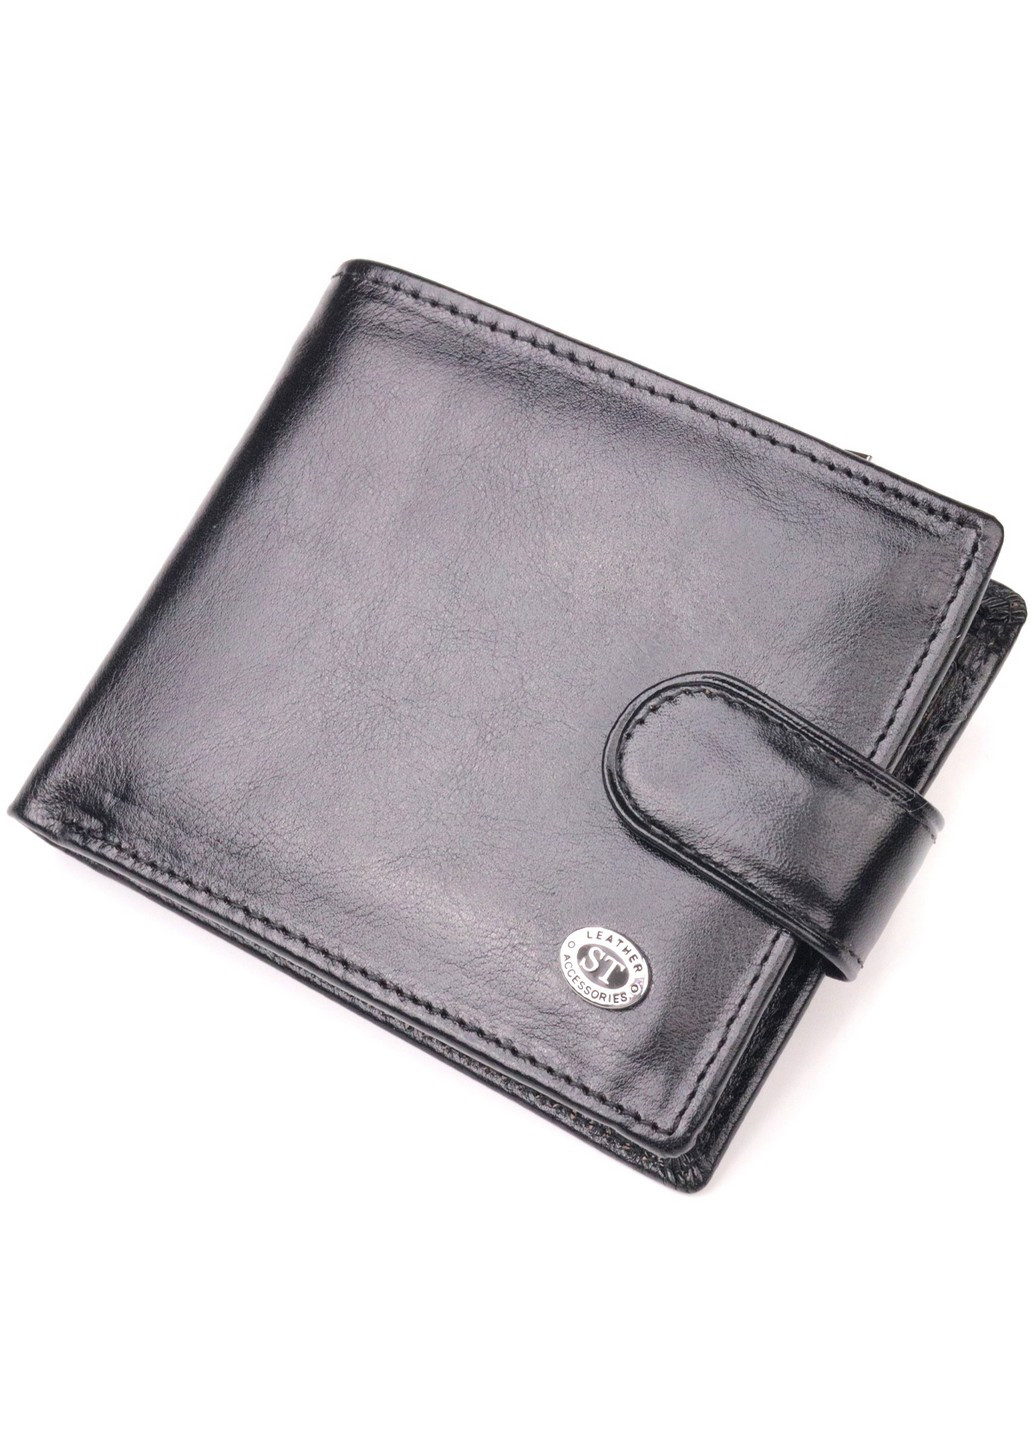 Бумажник кожаный мужской 11х9,5х2 см st leather (257255460)